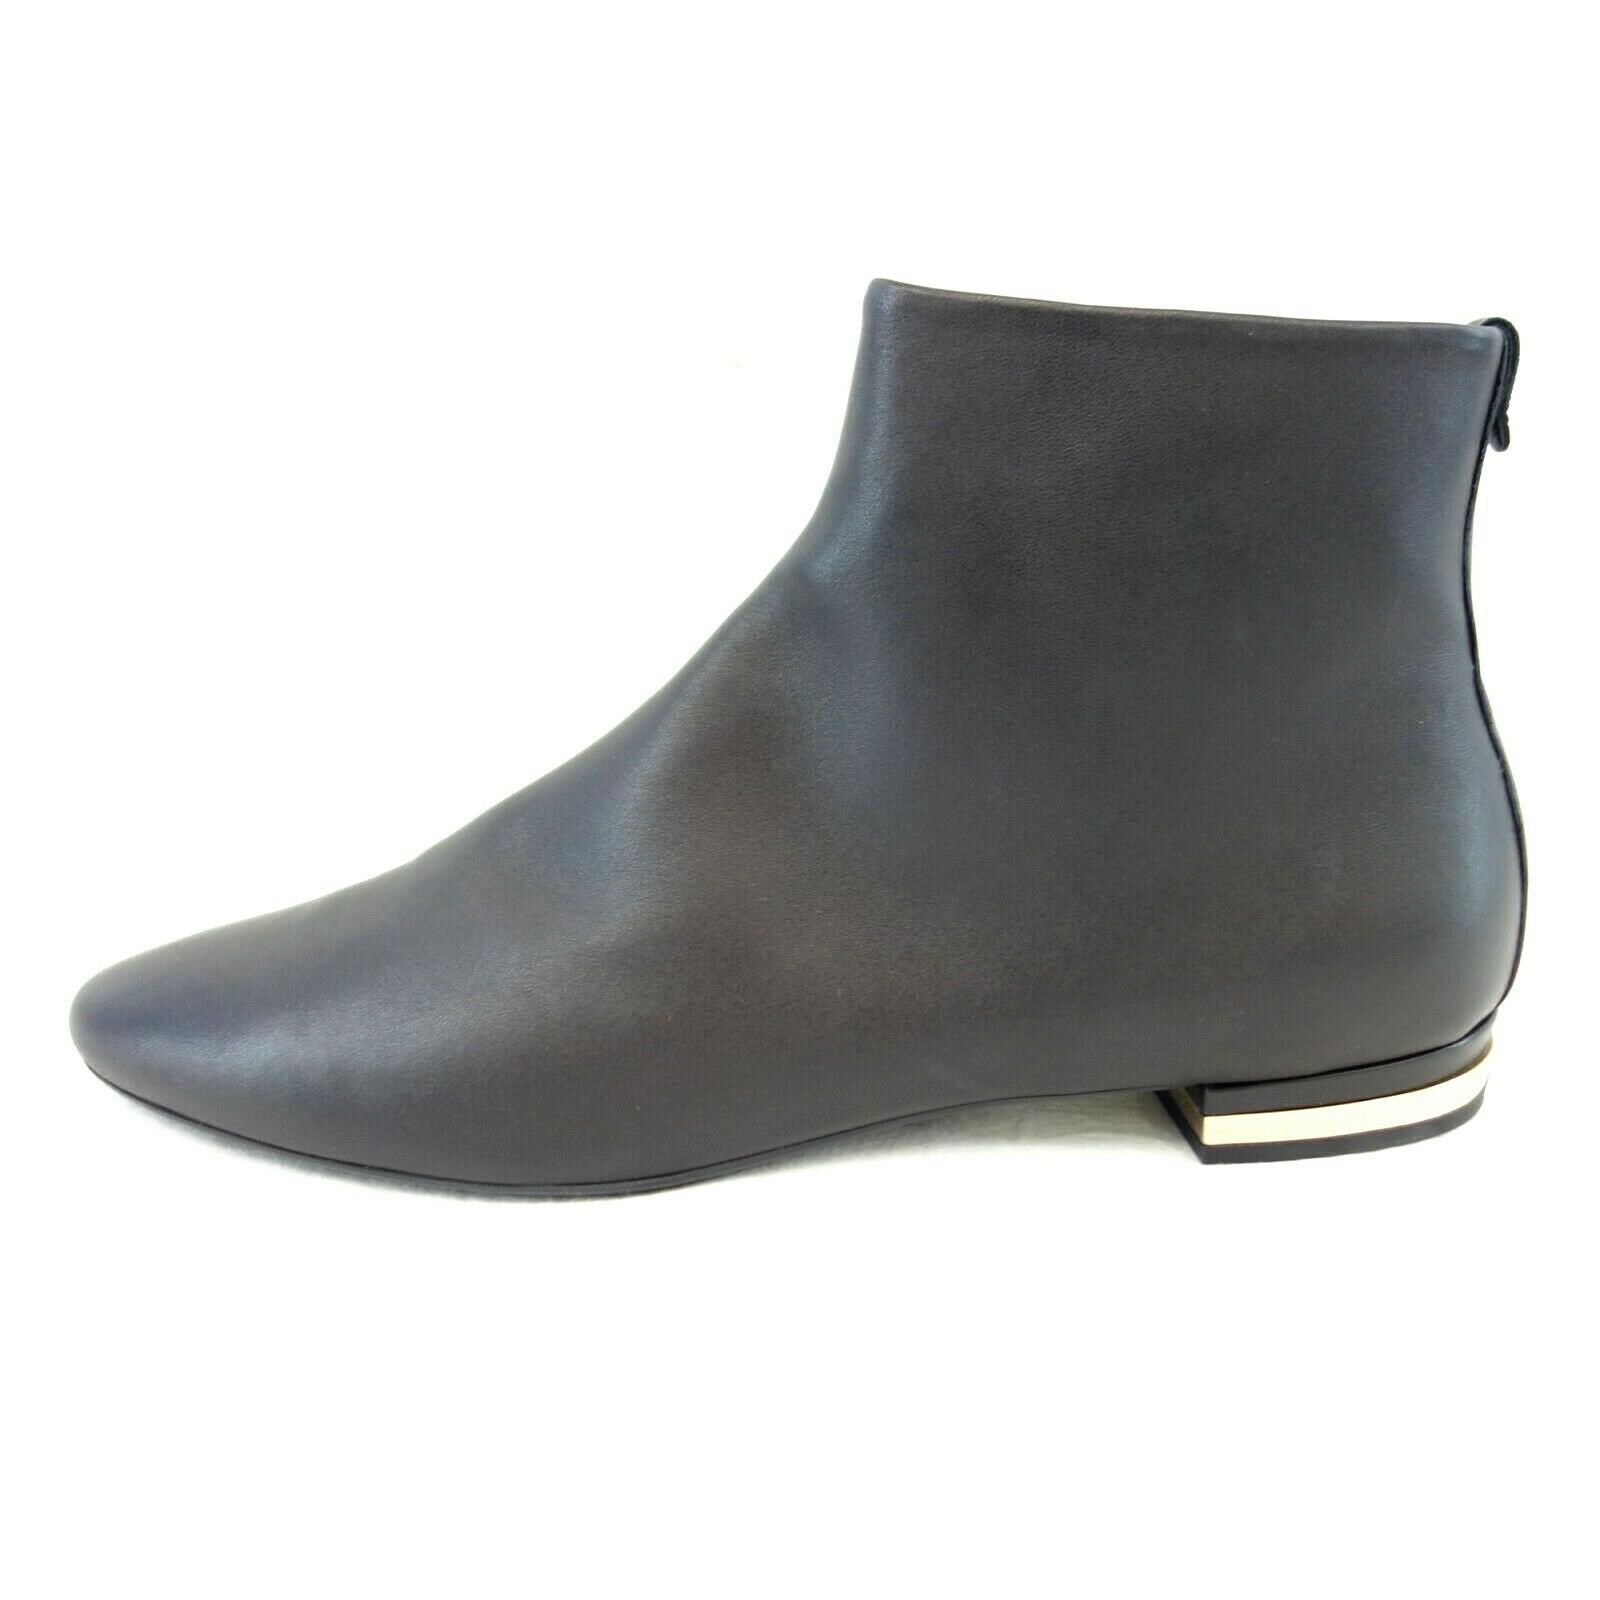 AGL Damen Schuhe Stiefeletten Boots Schwarz Leder 41 Metallic Absatz Np 269 Neu